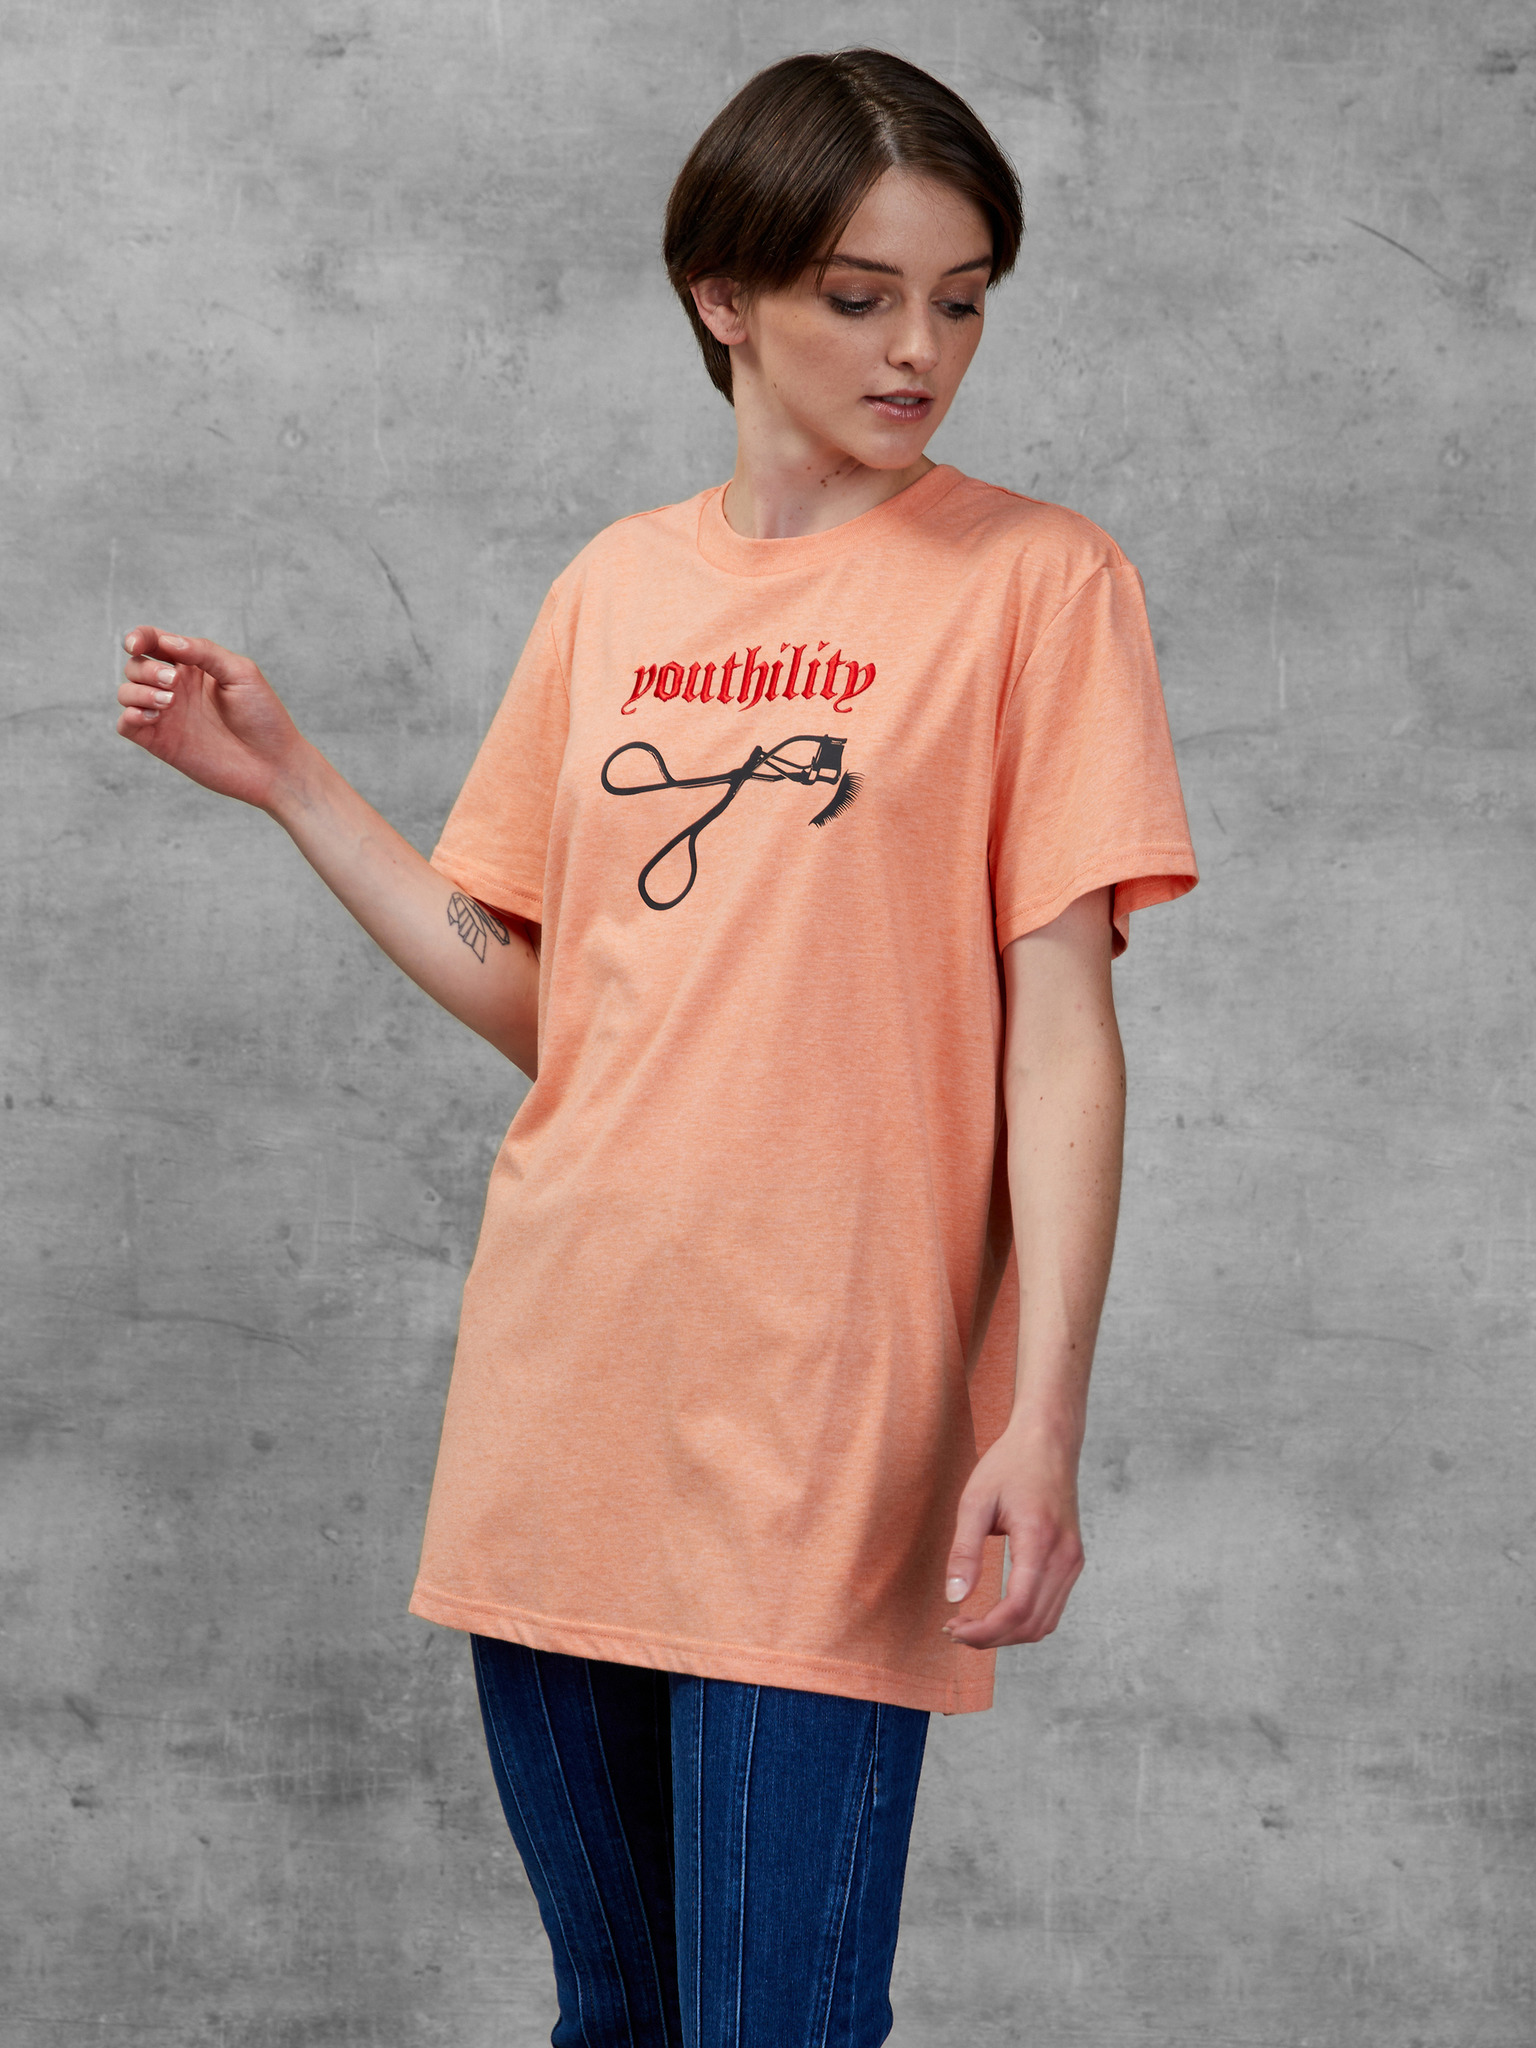 The Love Of Denim Shirts For Women | Womens denim shirt, Fitted denim shirt,  Denim shirt